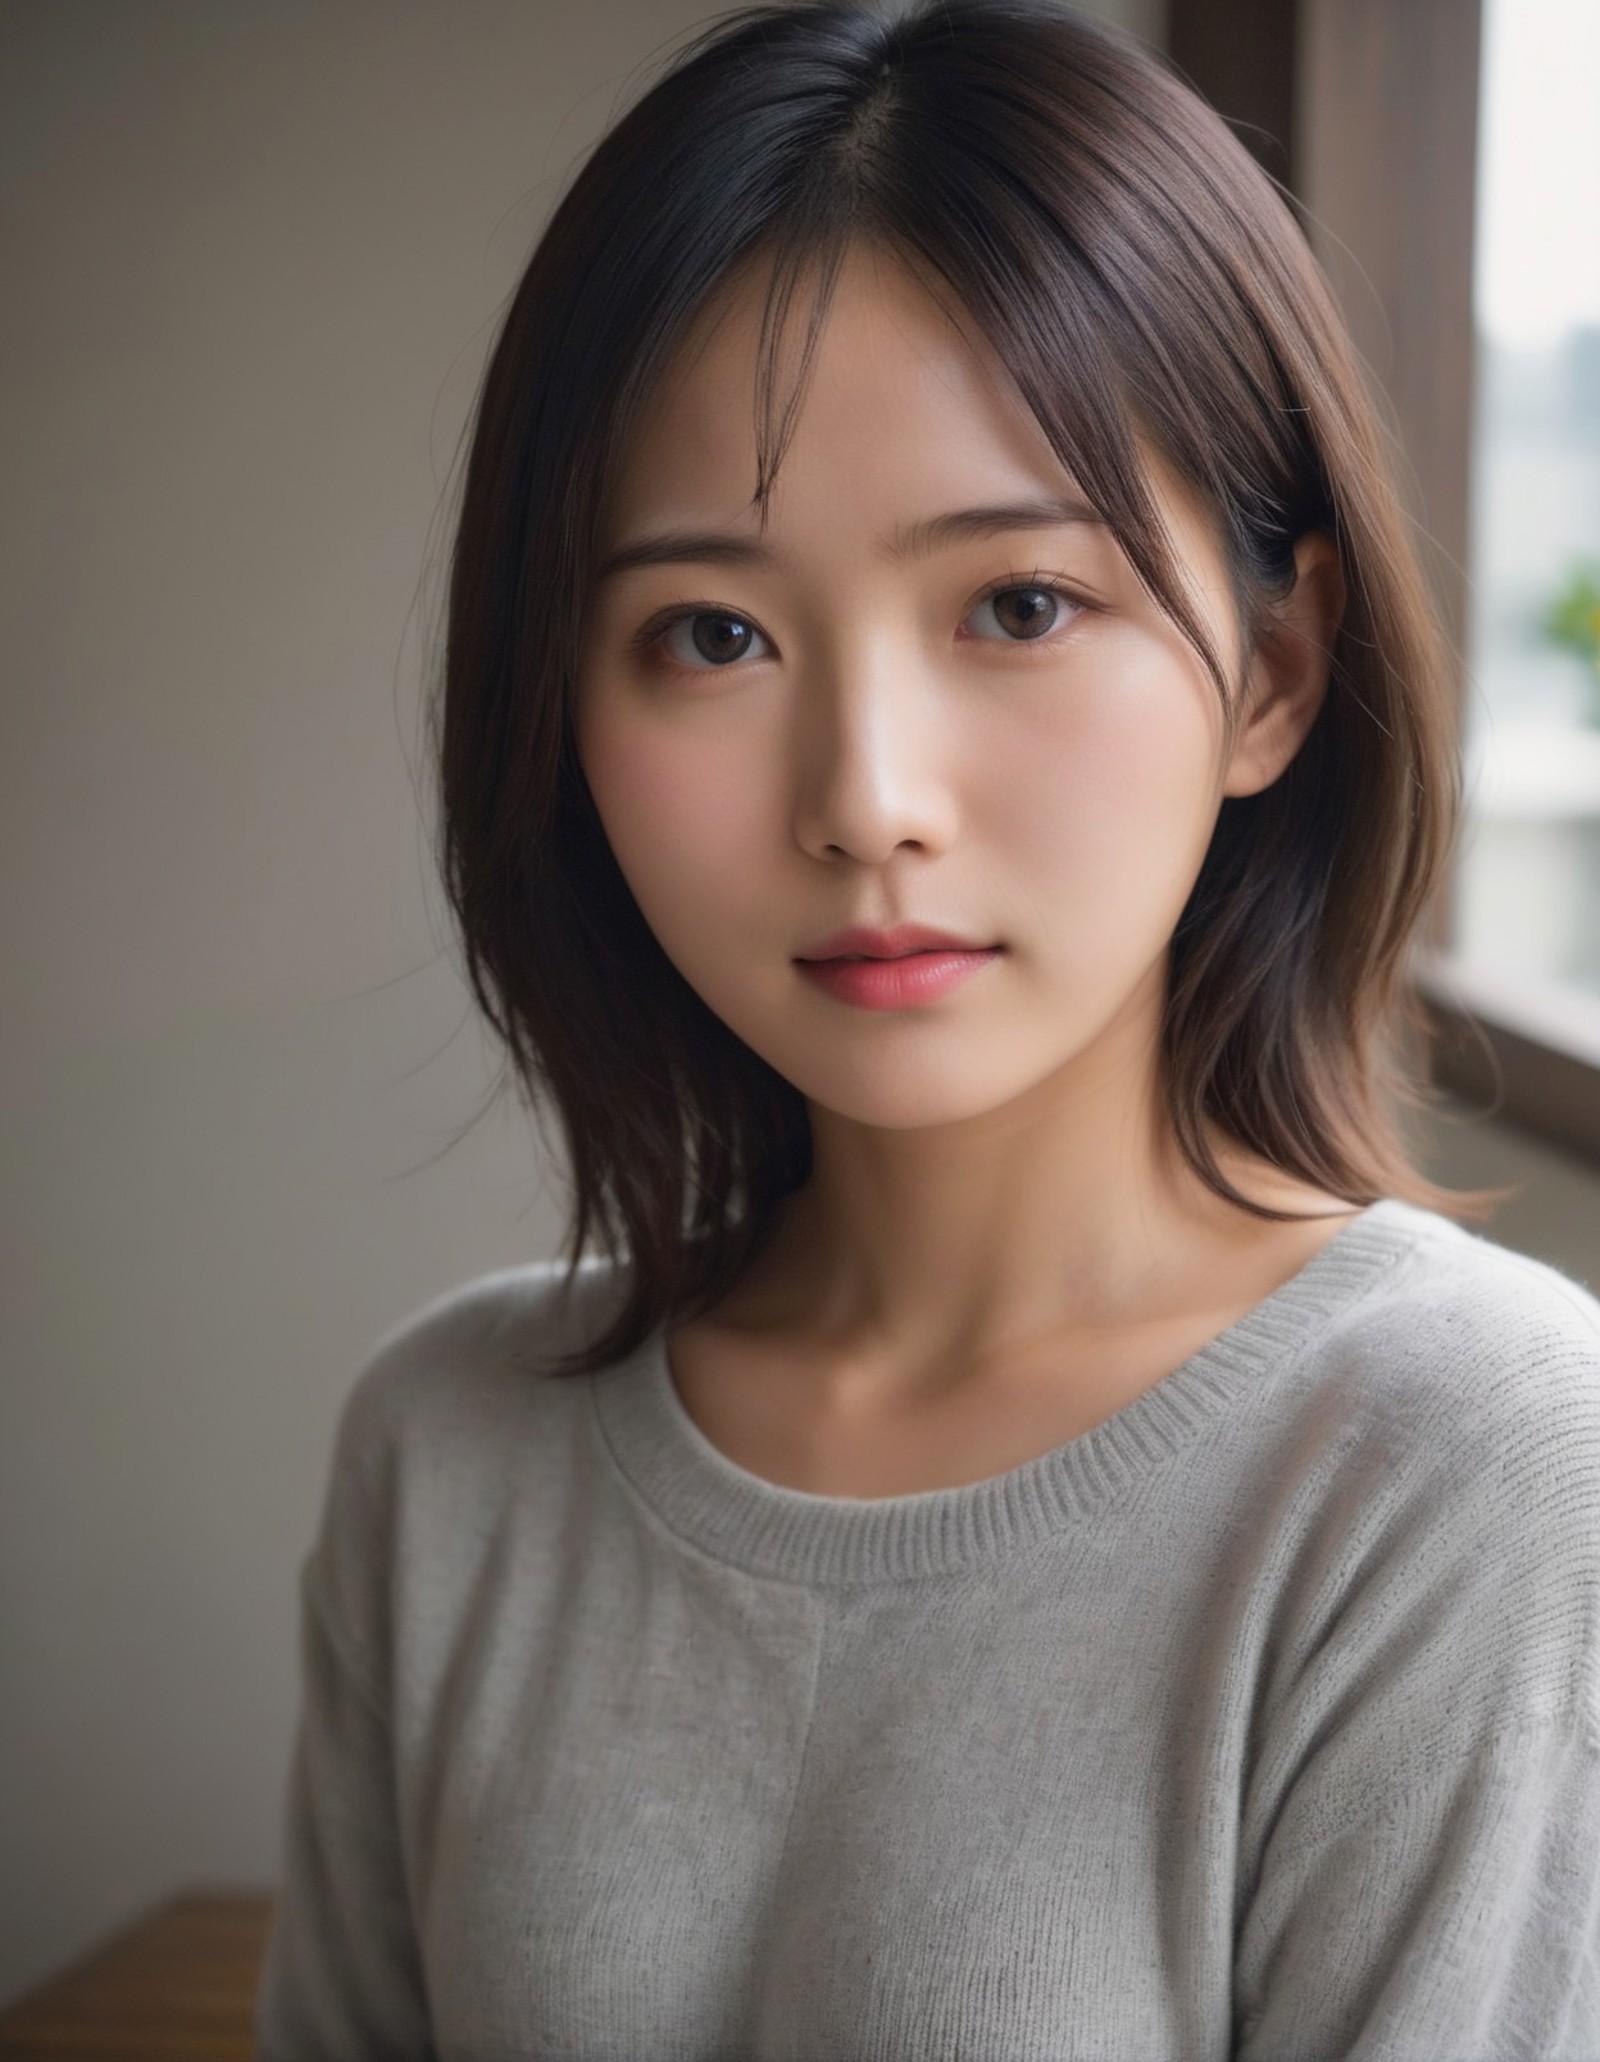 japanese woman, cute, 27yo, close-up, (natural lighting:2)
(gray sweater),
(thin curtain, dimly lit room:0.5)